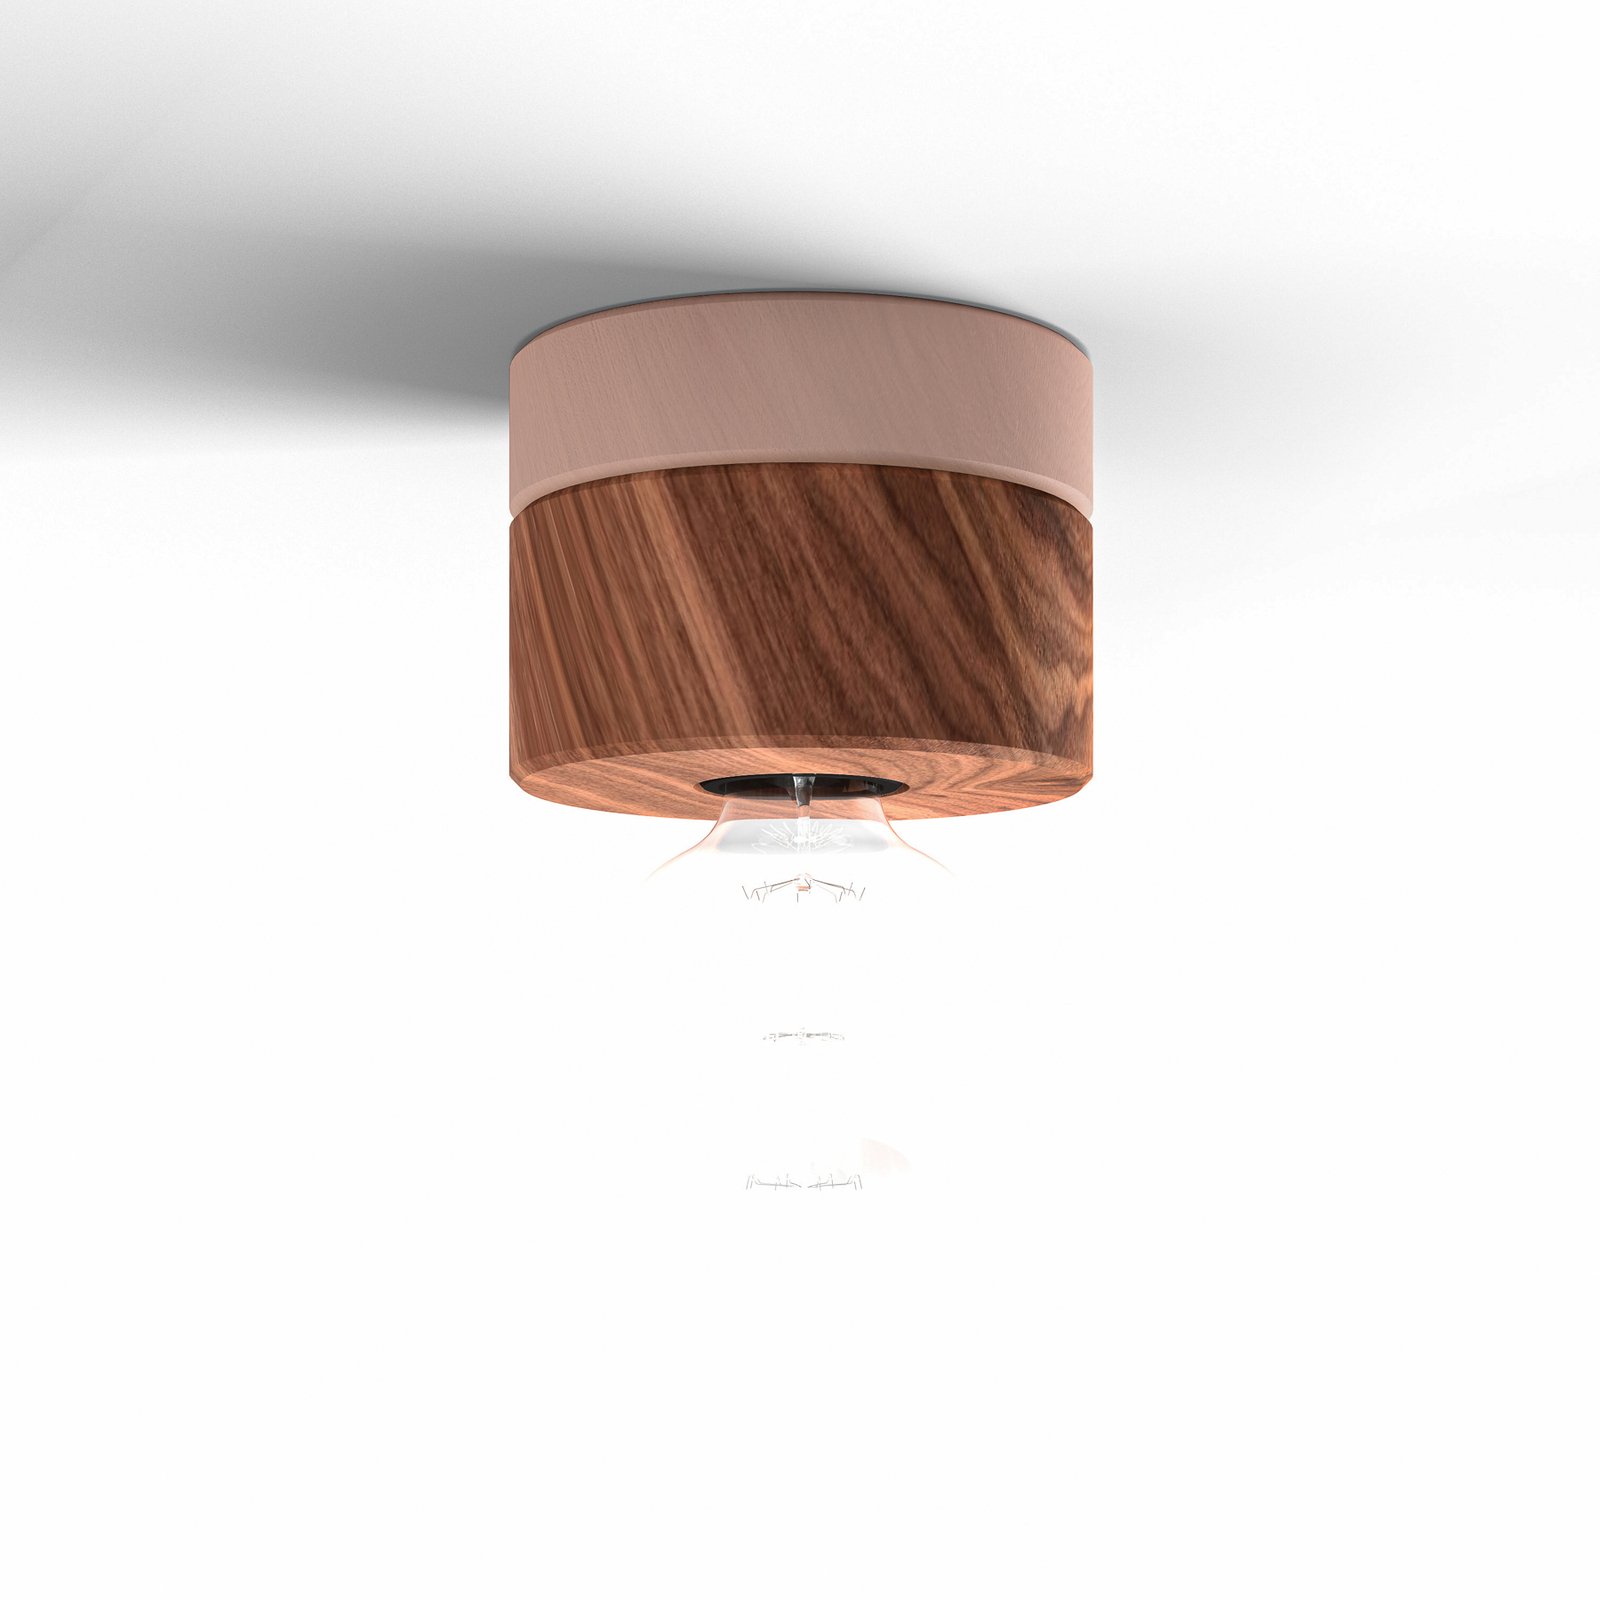 ALMUT 0239 plafondlamp, duurzaam, walnoot/roze